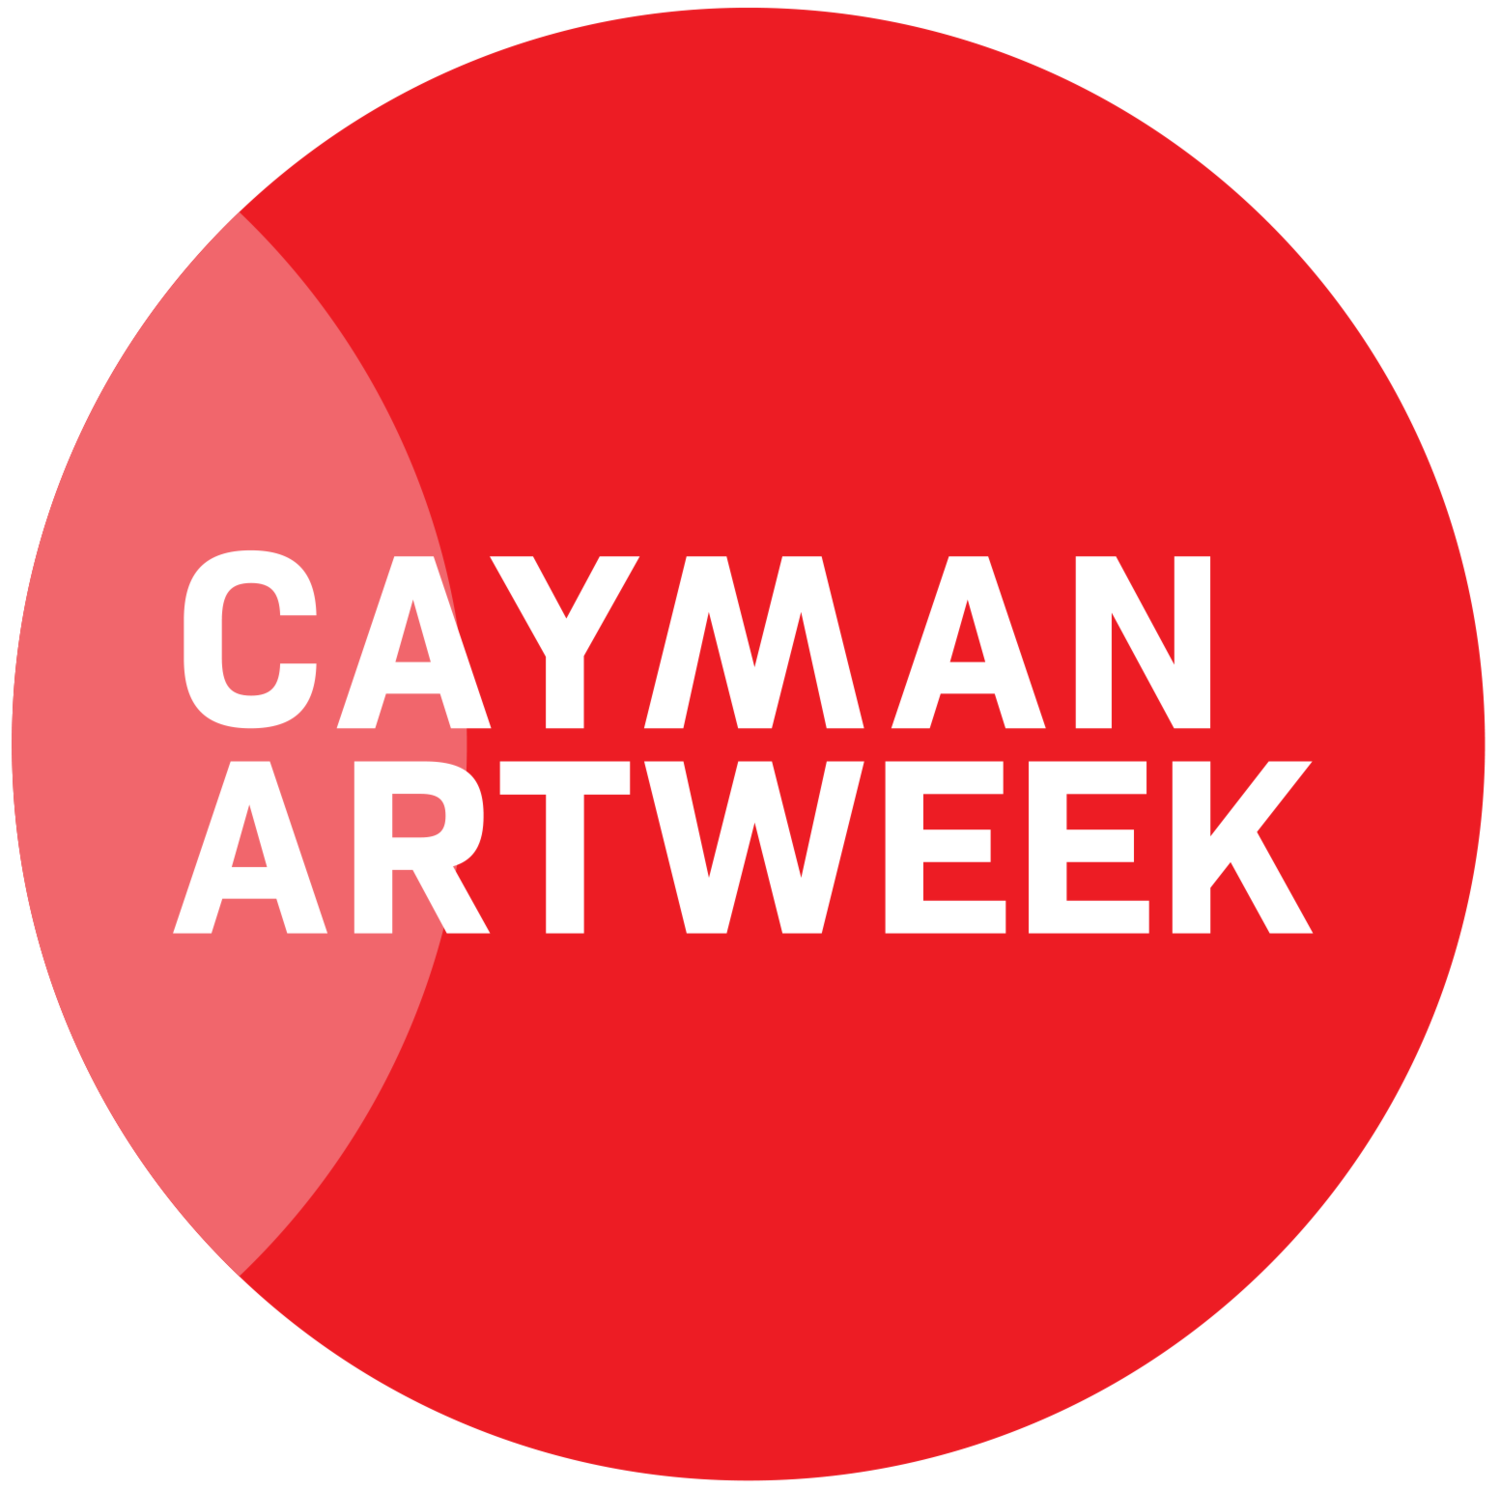 CAYMAN ARTWEEK